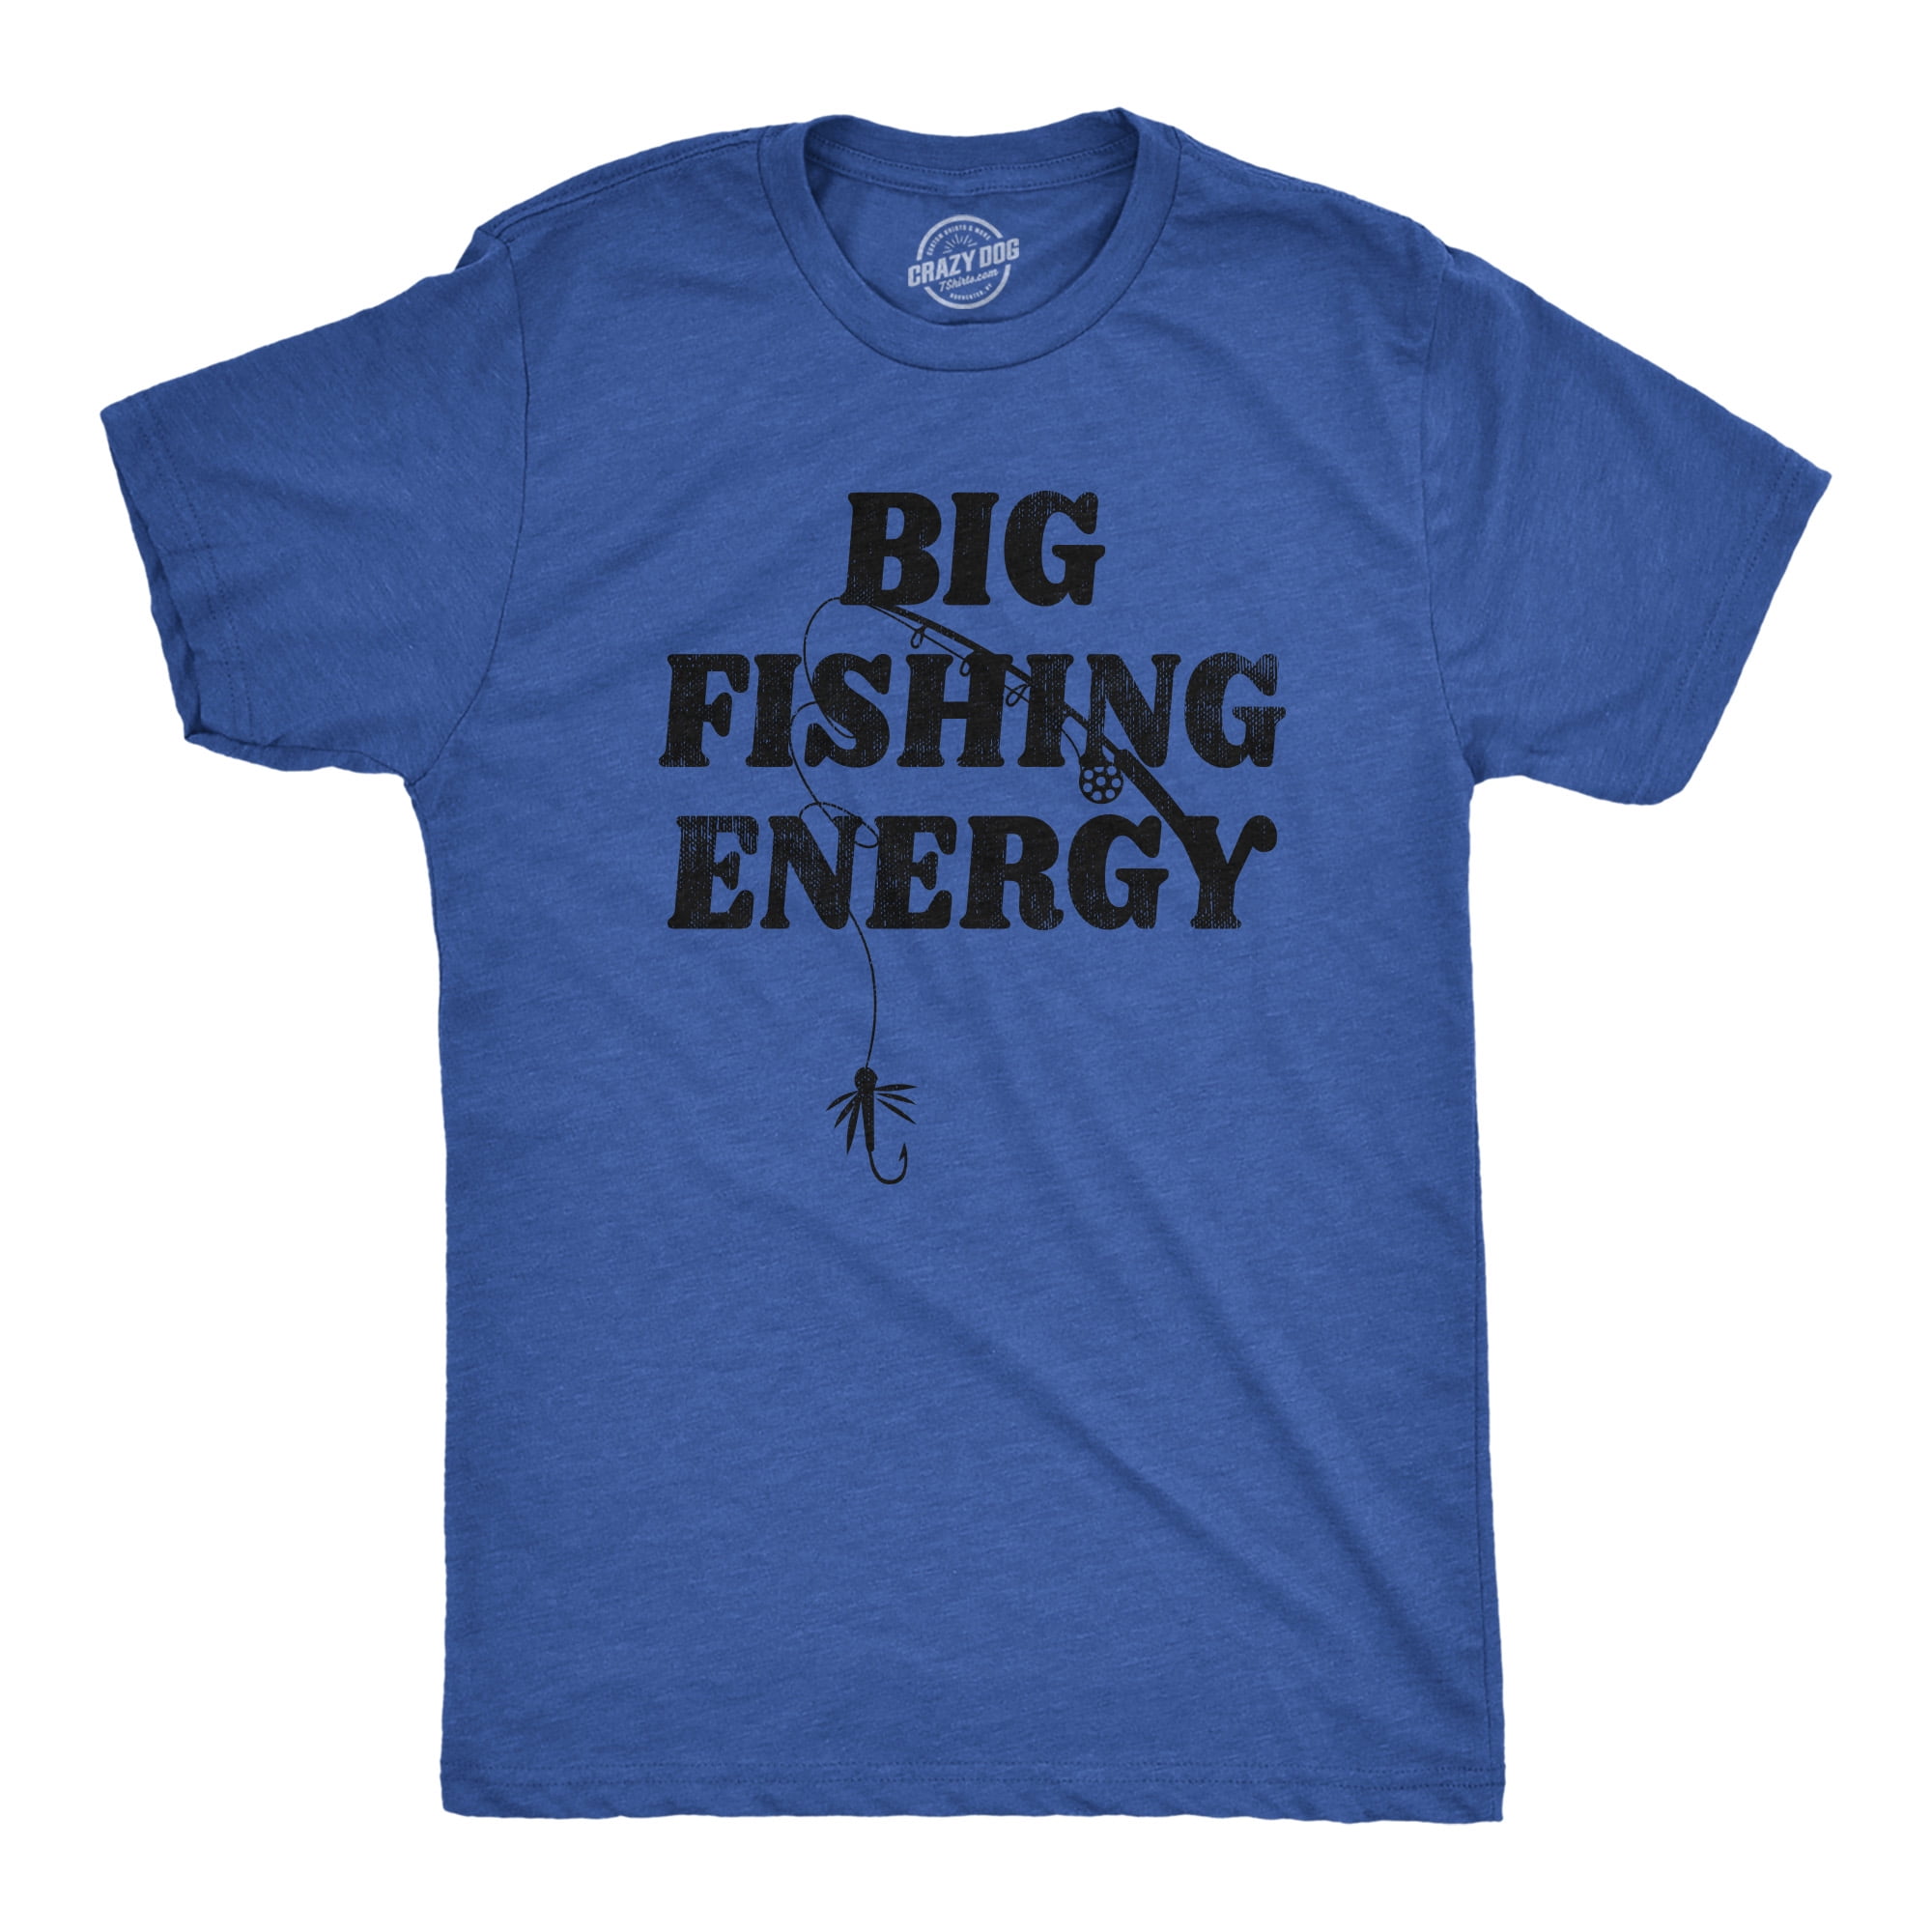 Thinking About Fishing Fisherman T Shirts Men Cotton T-Shirt